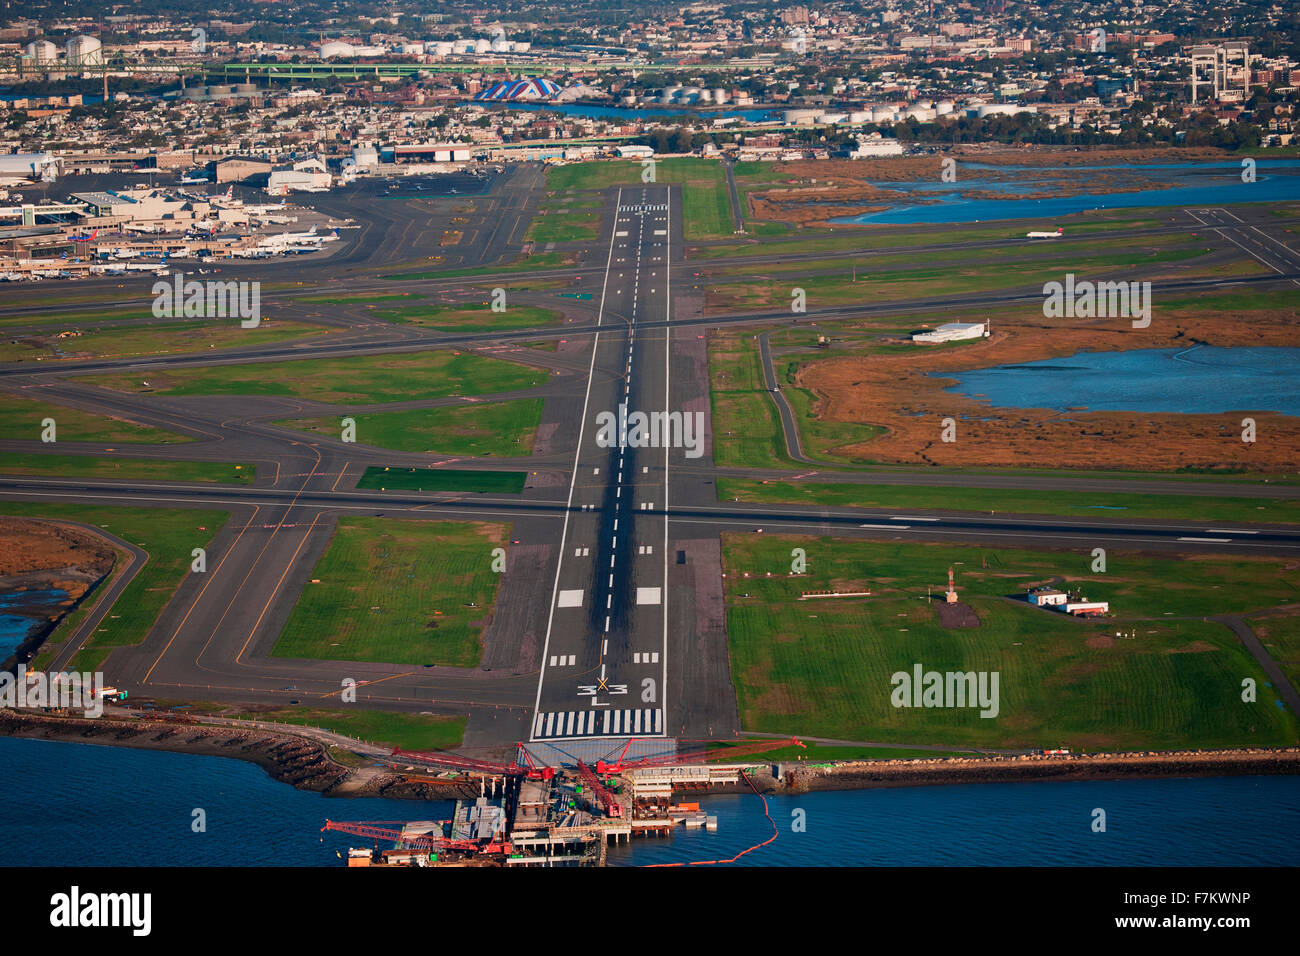 AERIAL VIEW of runway at Logan International Airport, Boston, MA Stock Photo